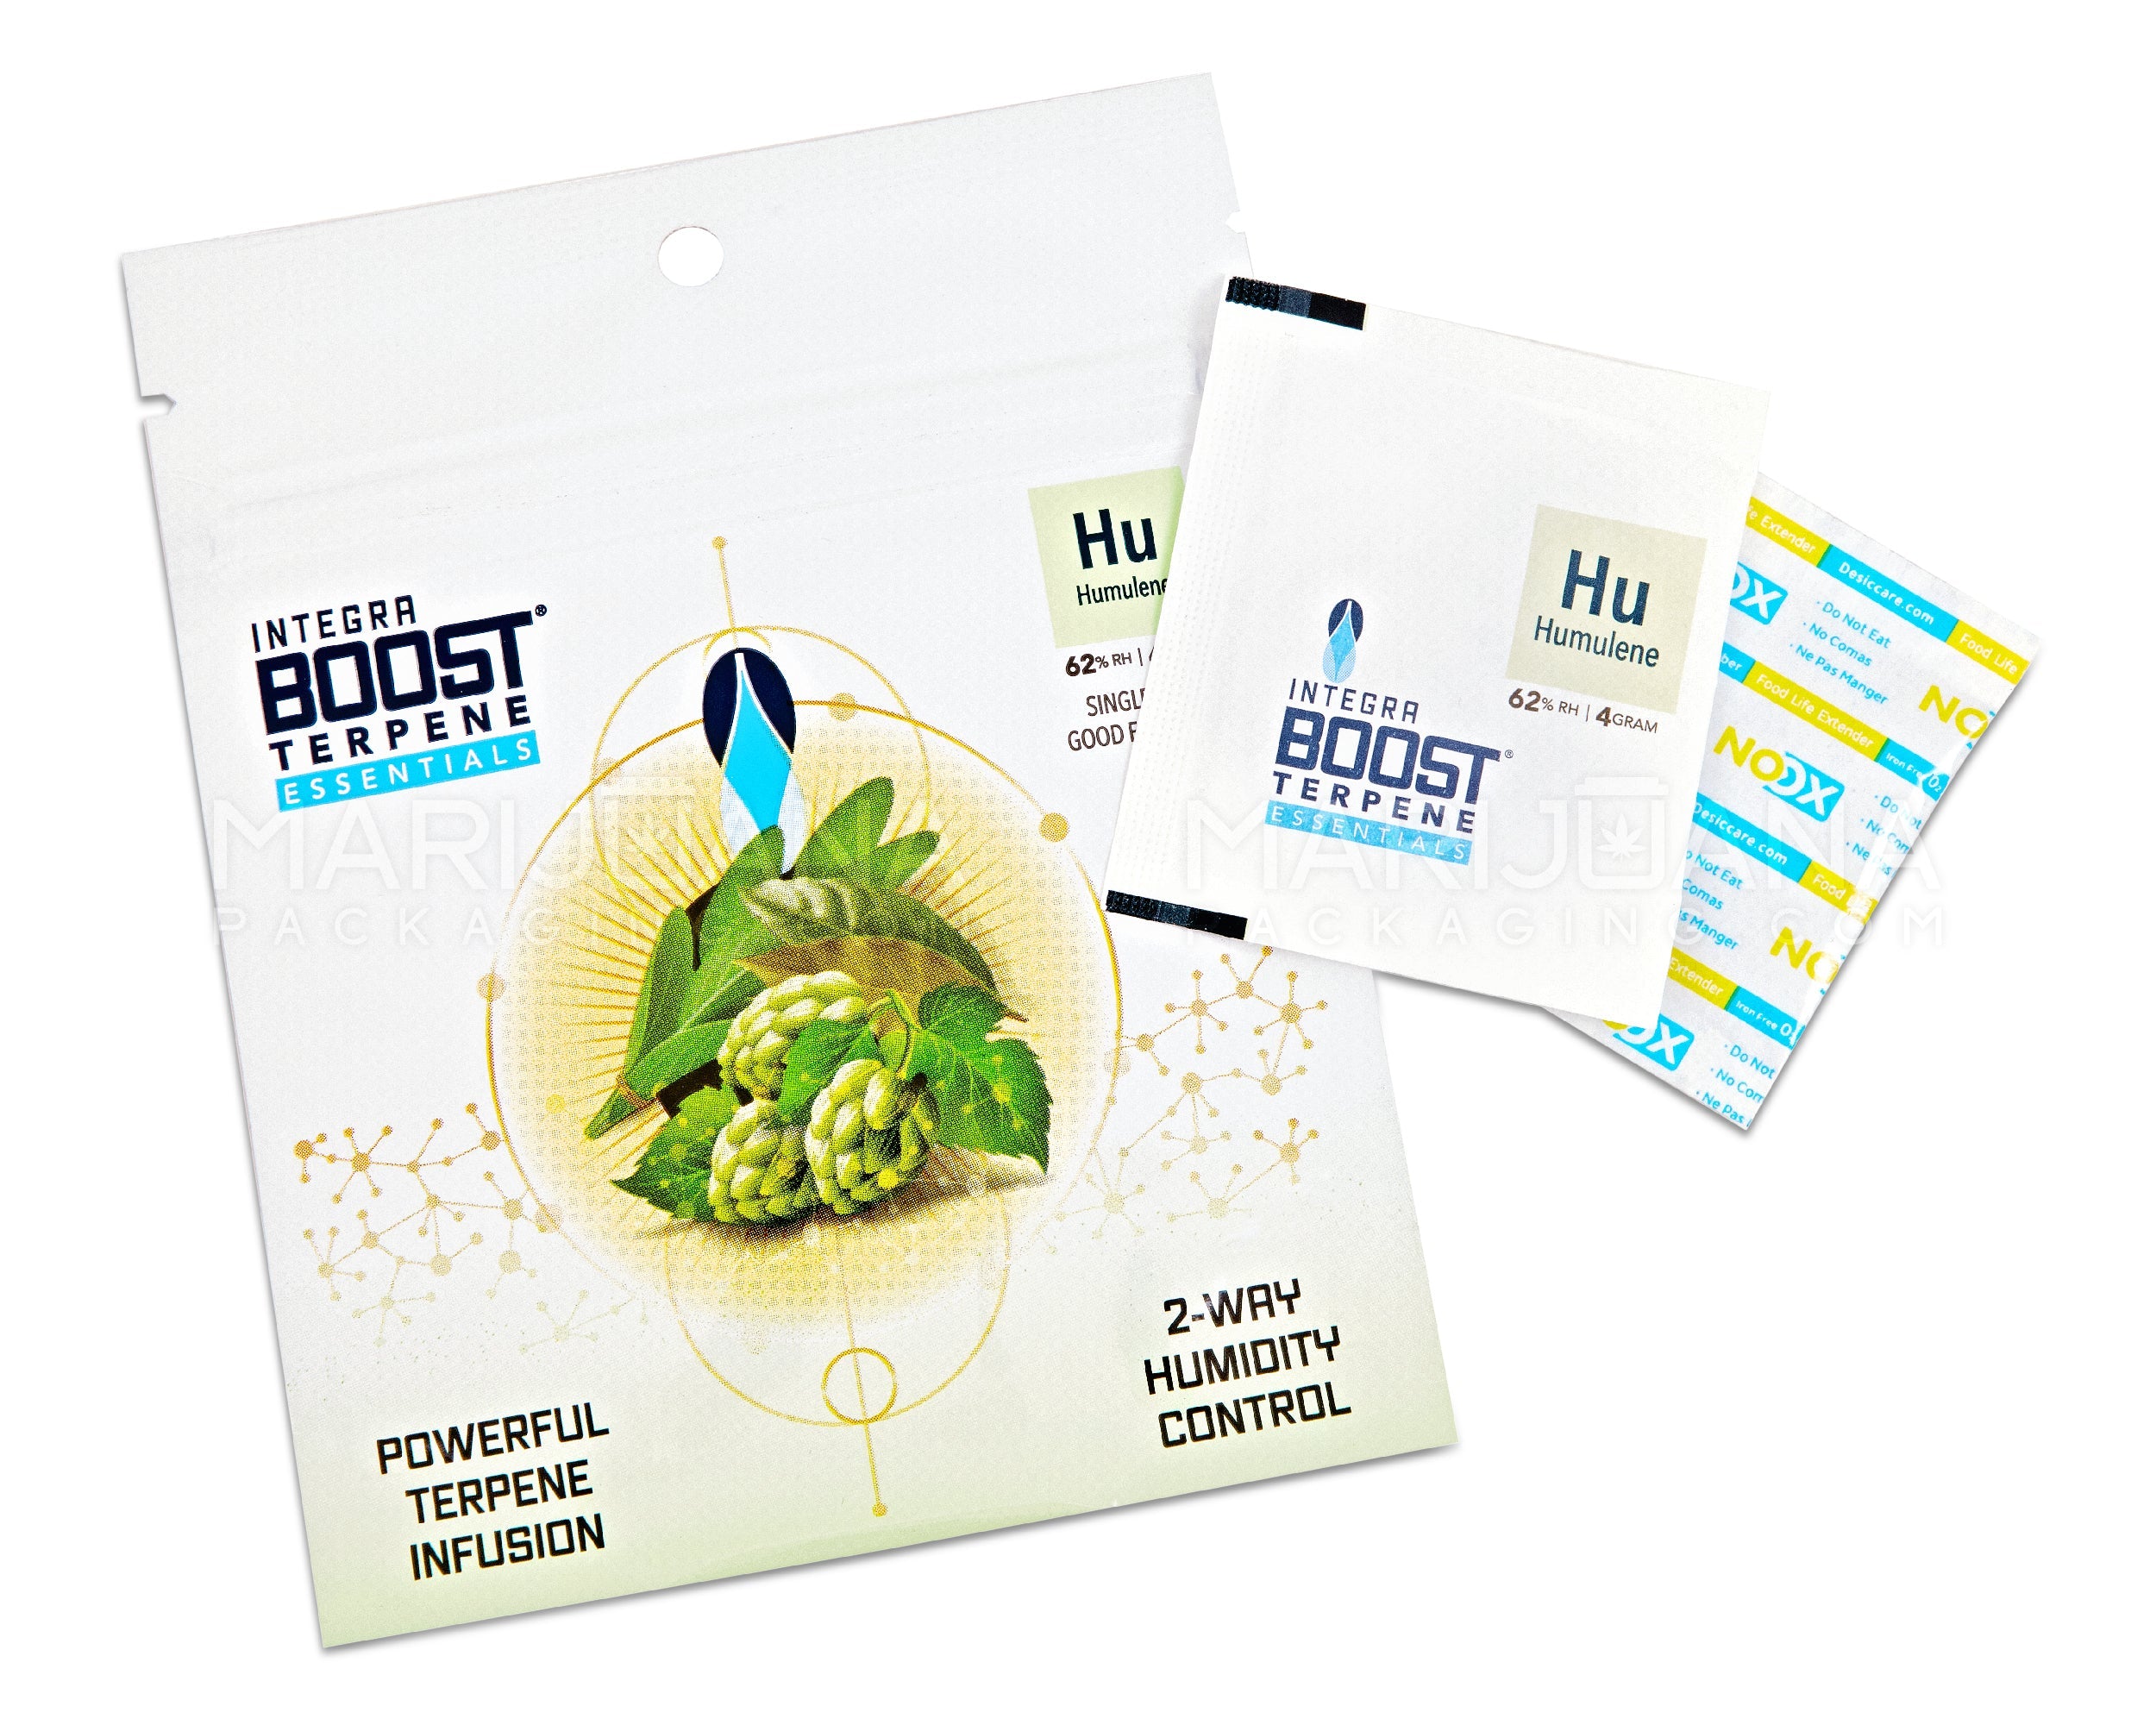 INTEGRA Boost Terpene Essentials Humulene Humidity Pack | 4 Grams - 62% | Sample - 5